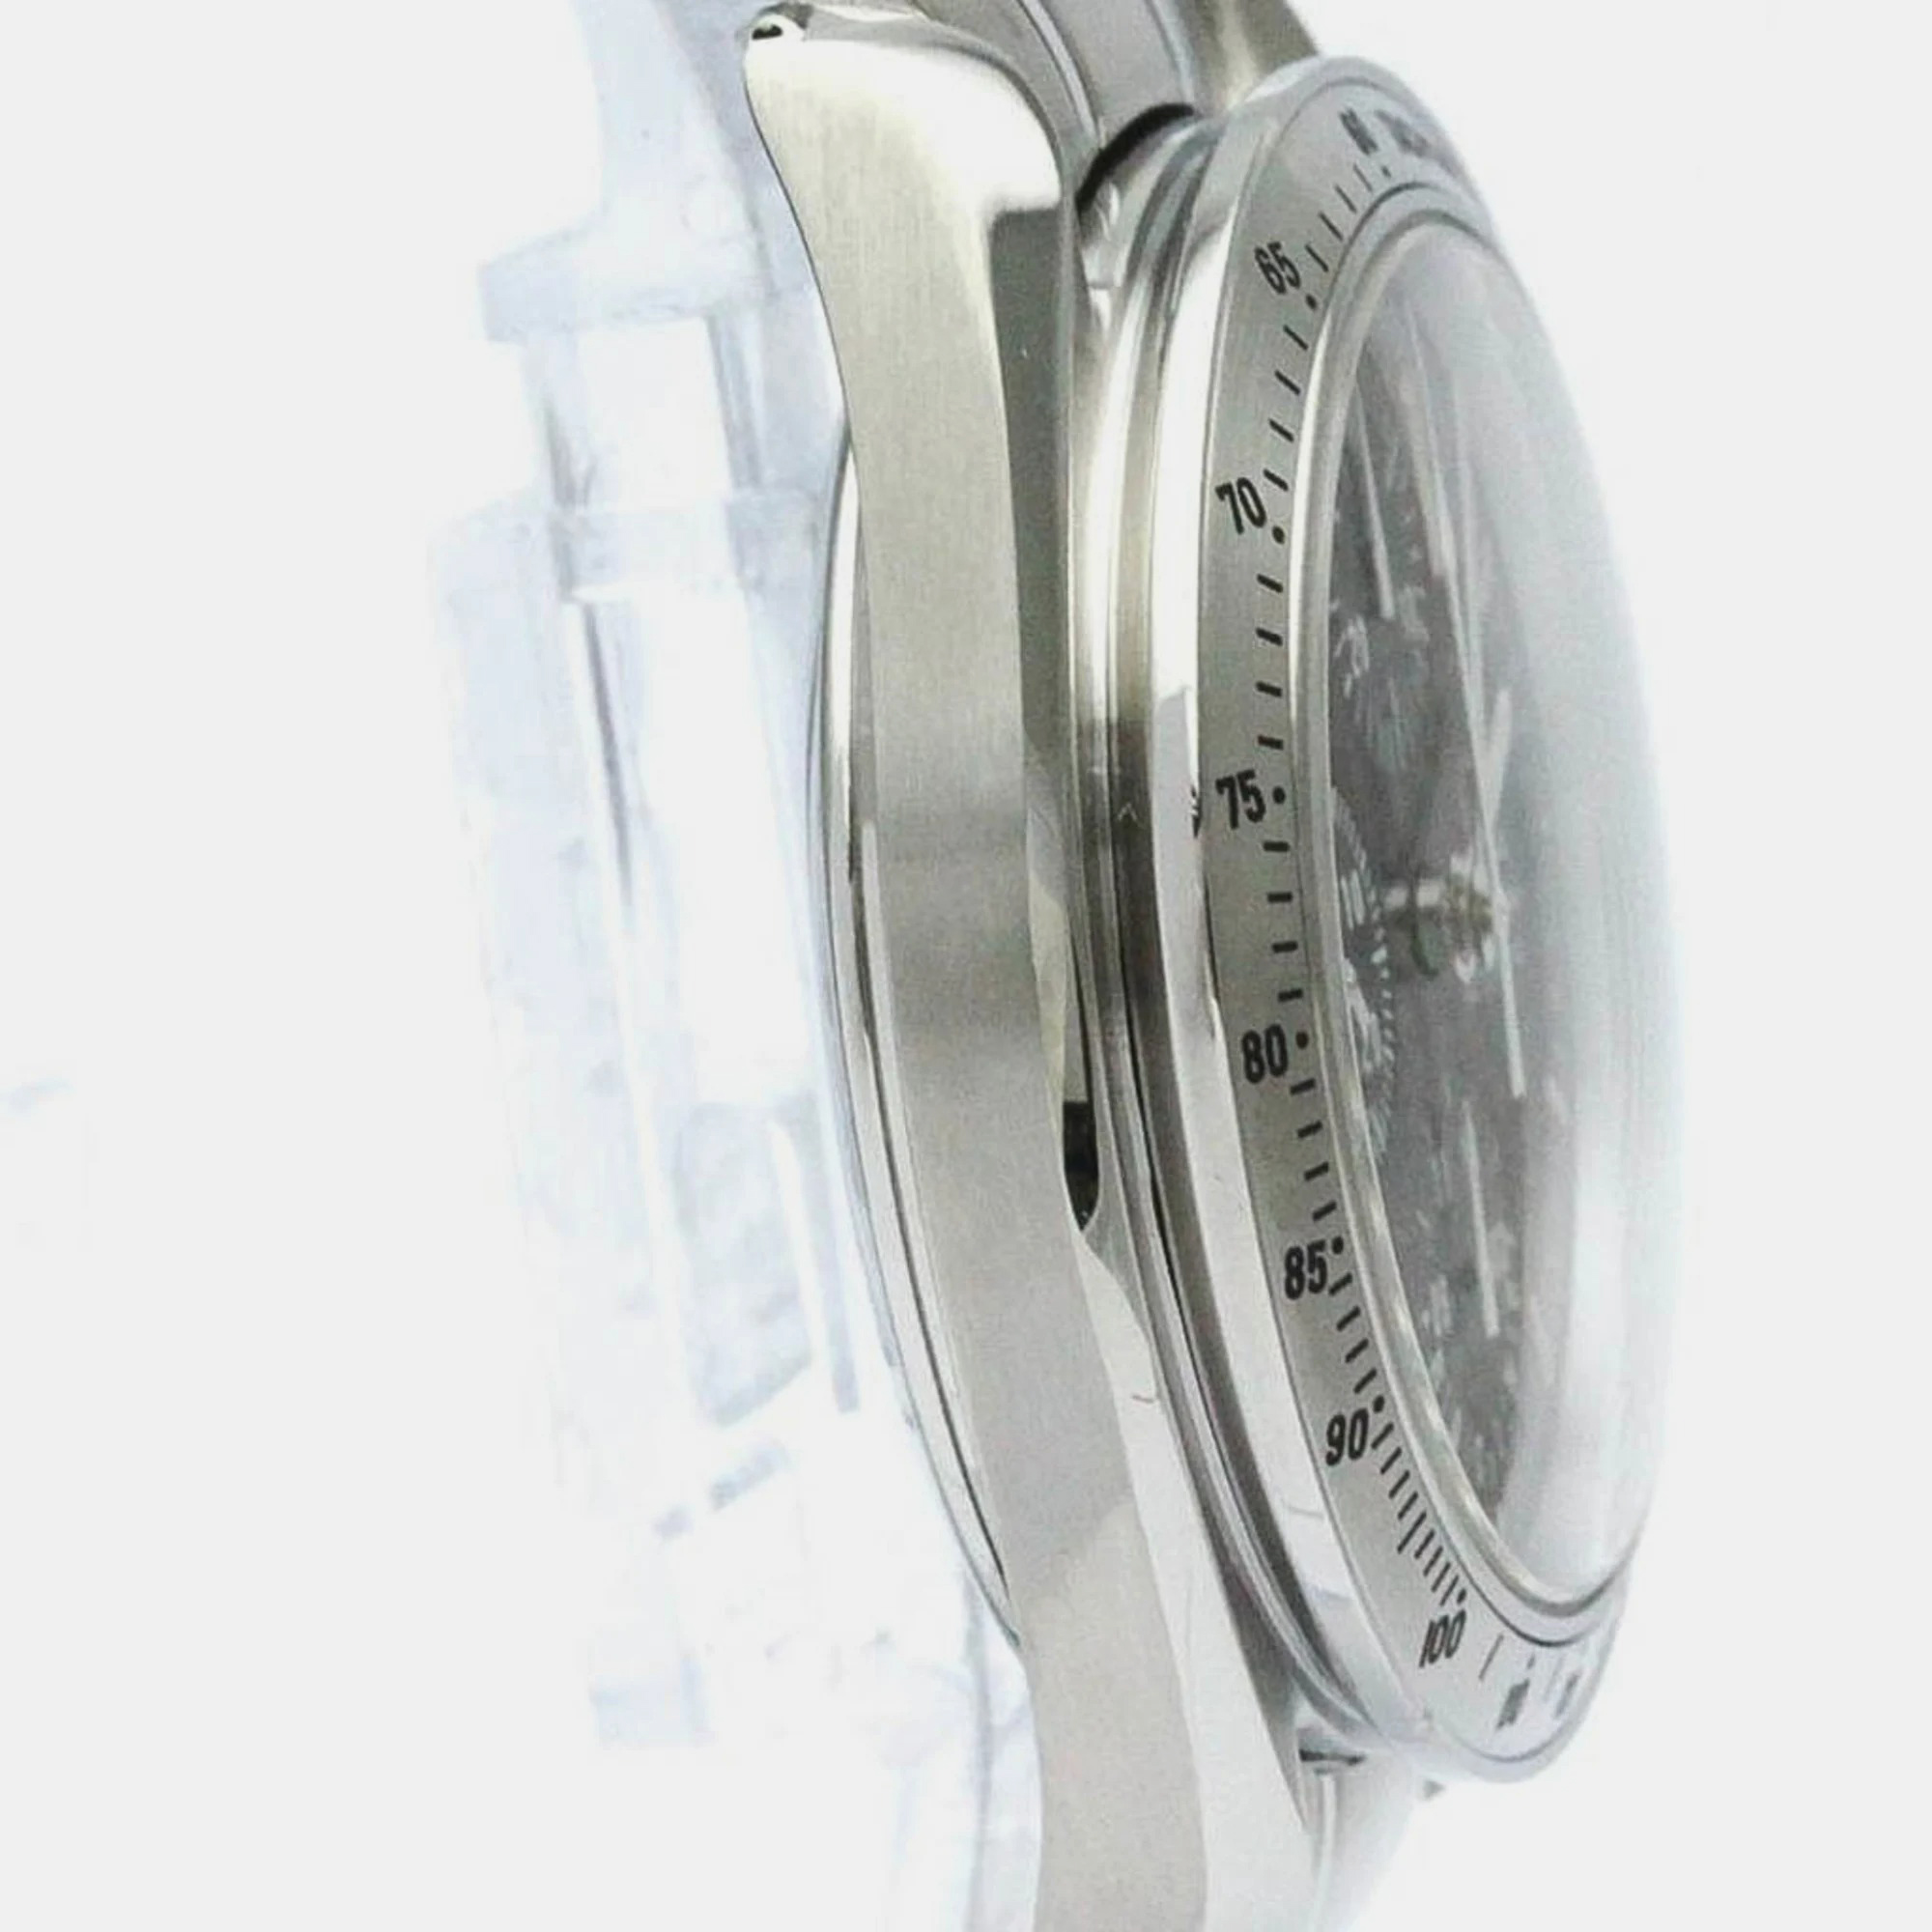 Omega Black Stainless Steel Speedmaster 3519.50 Automatic Men's Wristwatch 39 Mm